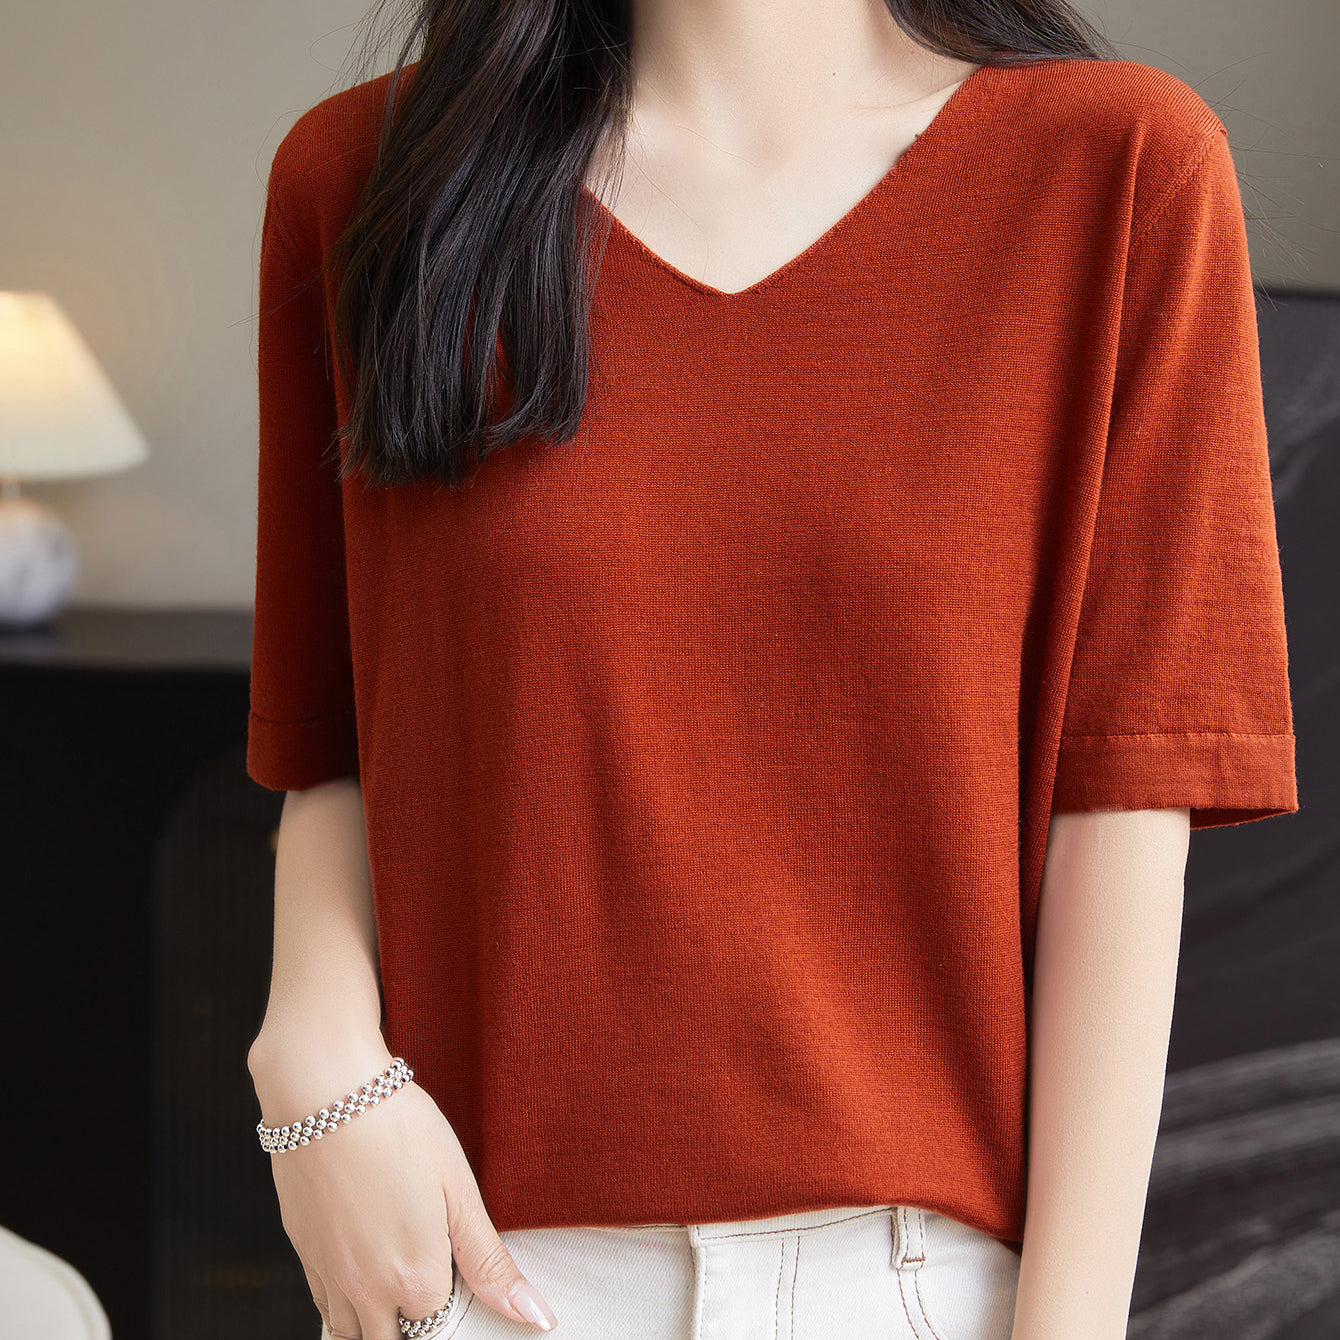 Chanyarn Women's 100% Merino Wool Base Layer Shirt Tops V Neck Short Sleeve Travel Hiking Tee T Shirt Pullover Sweater